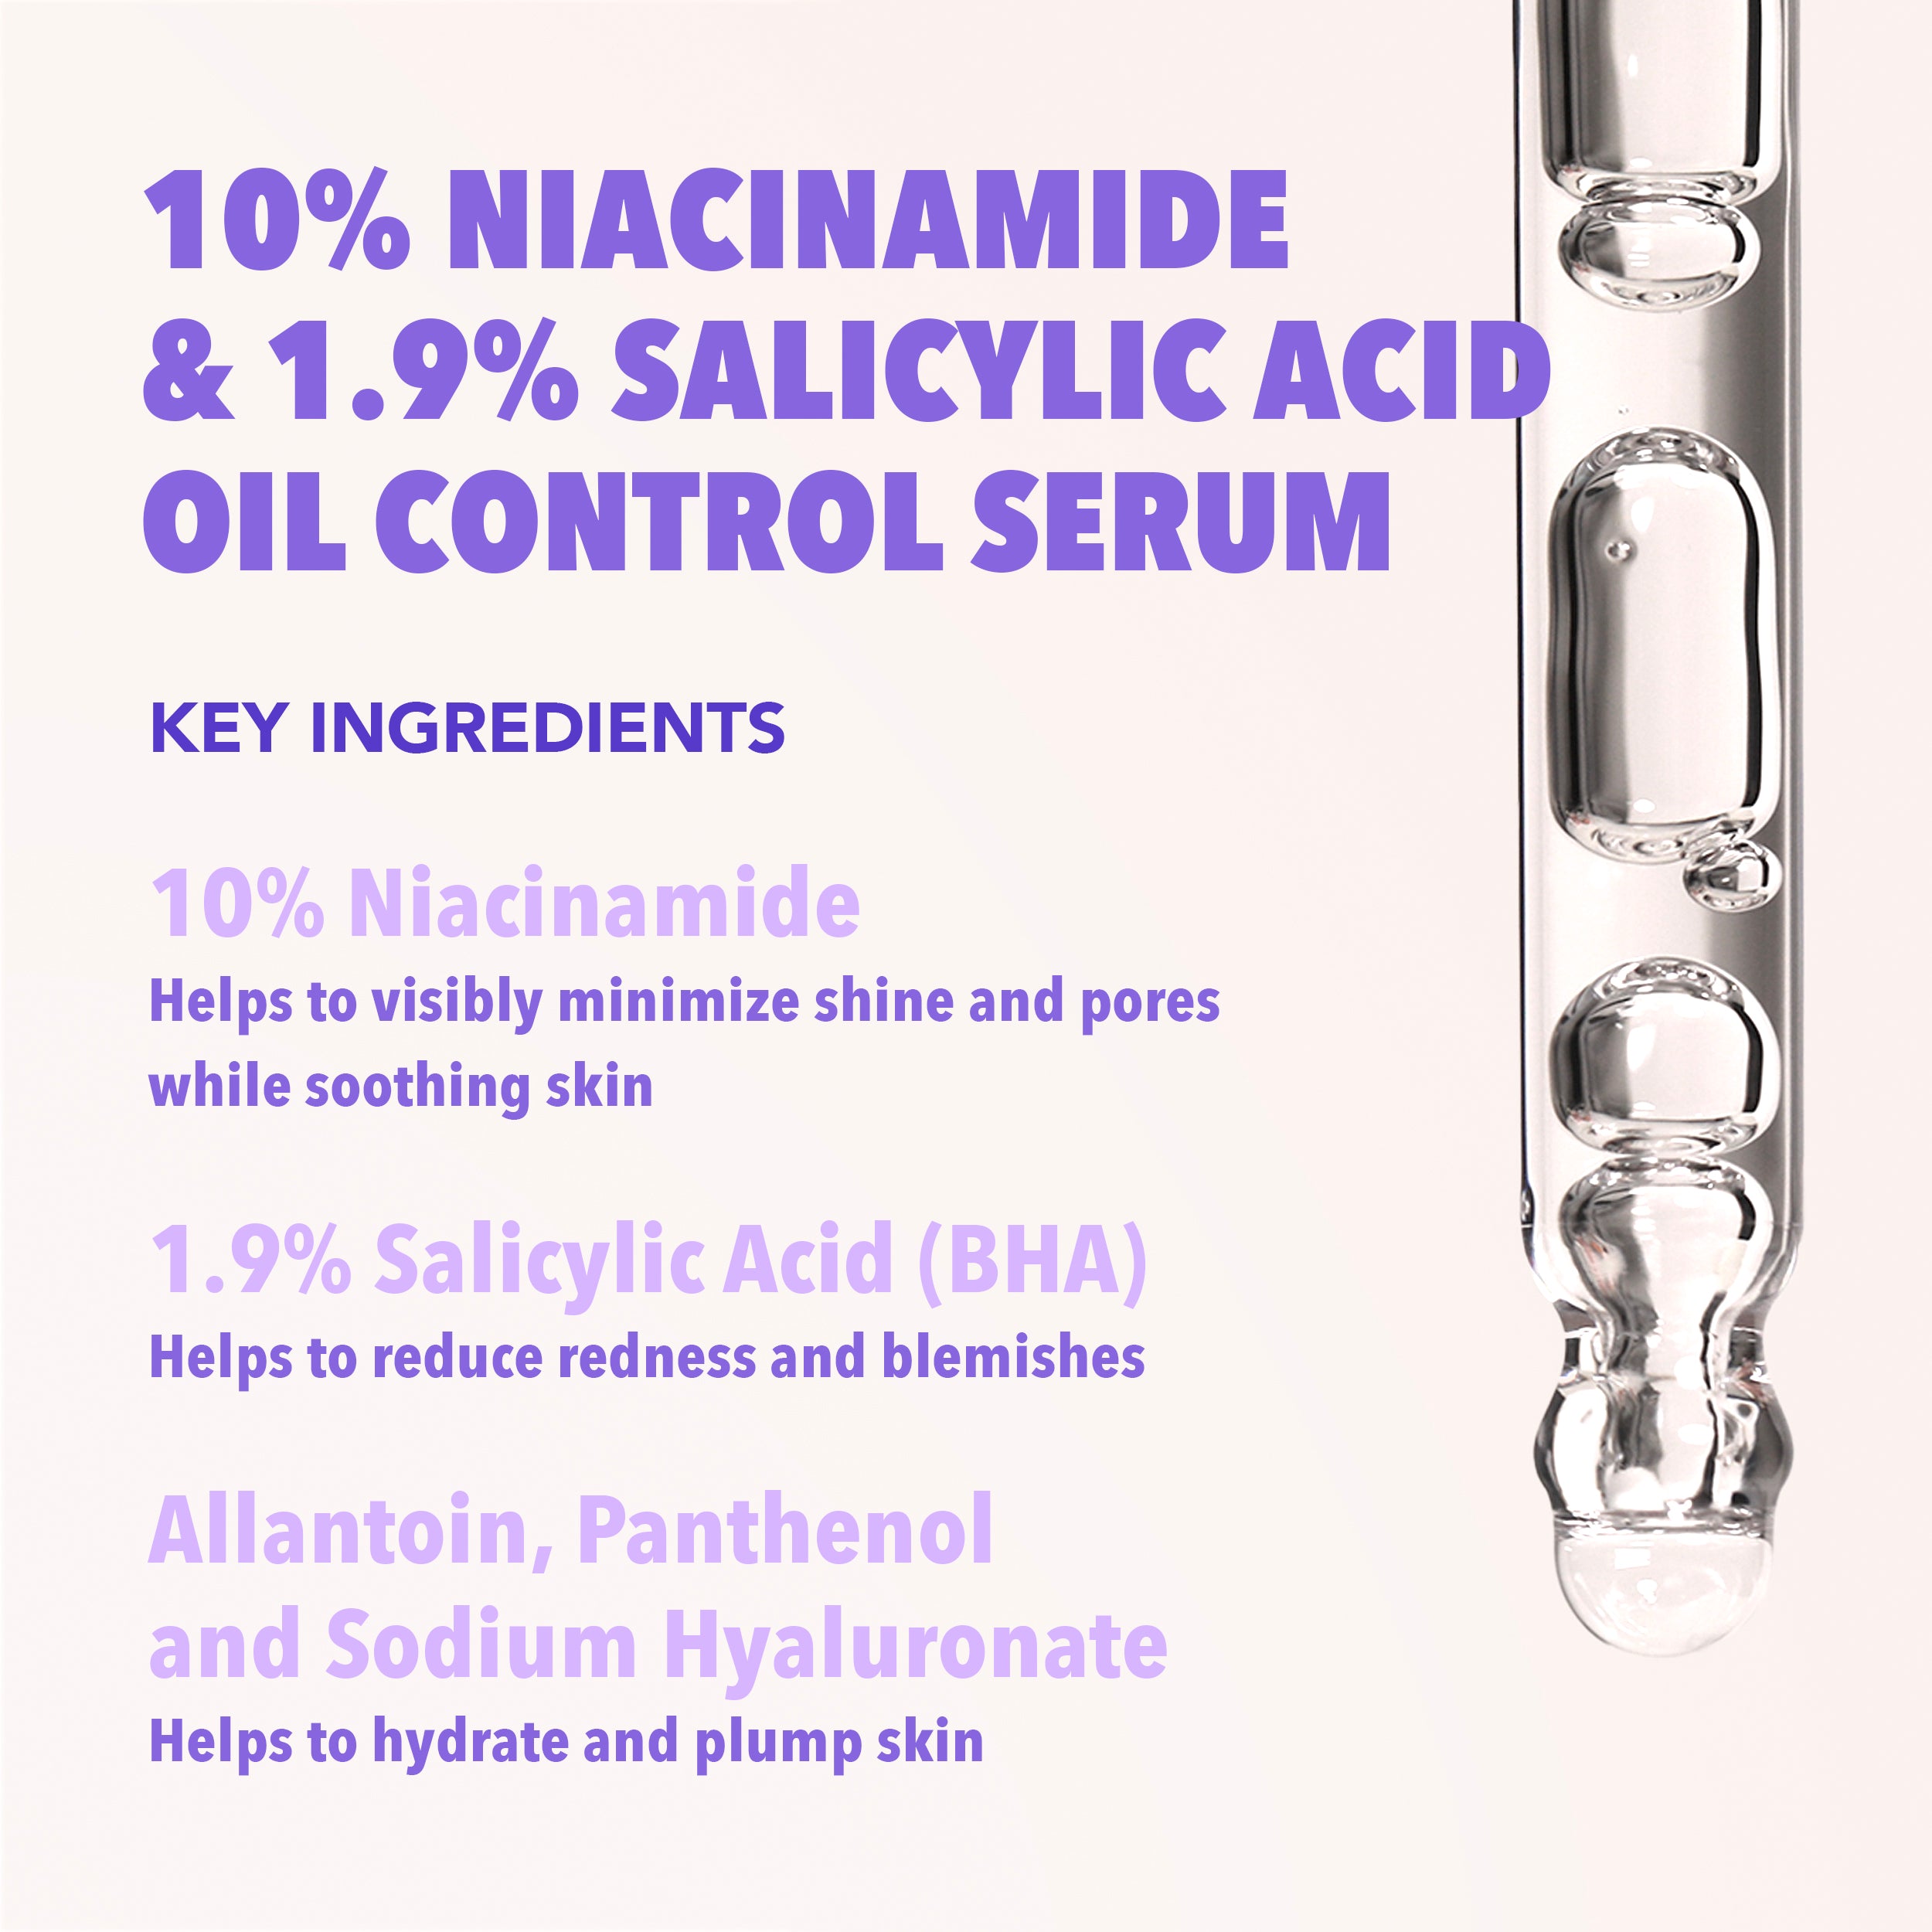 10% Niacinamide & 1.9% Salicylic Acid Oil Control Serum